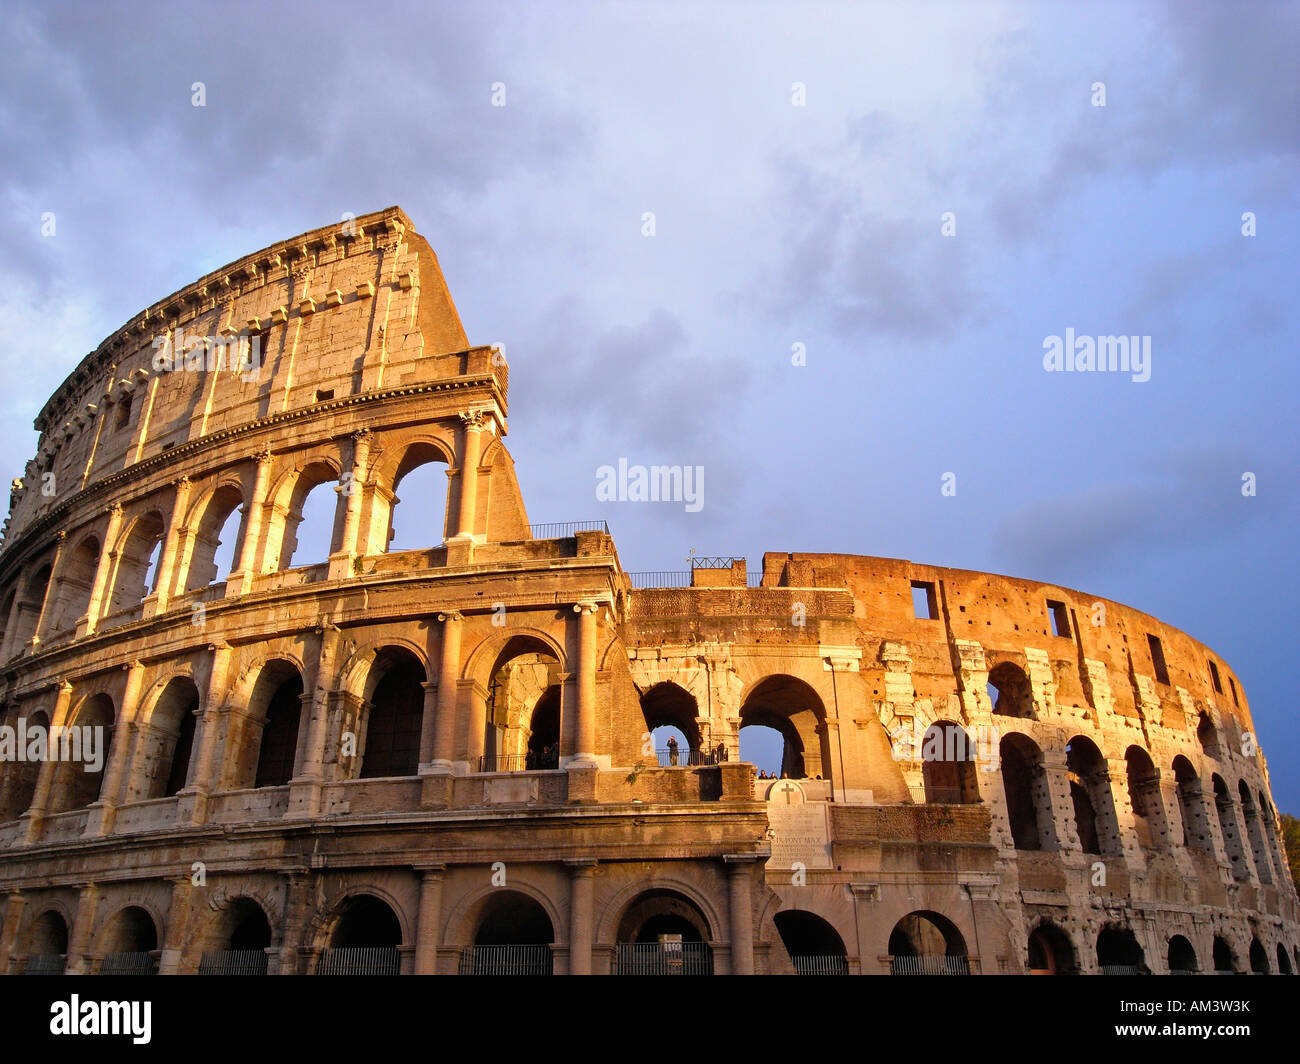 Colosseum Rome Italy Europe Stock Photo